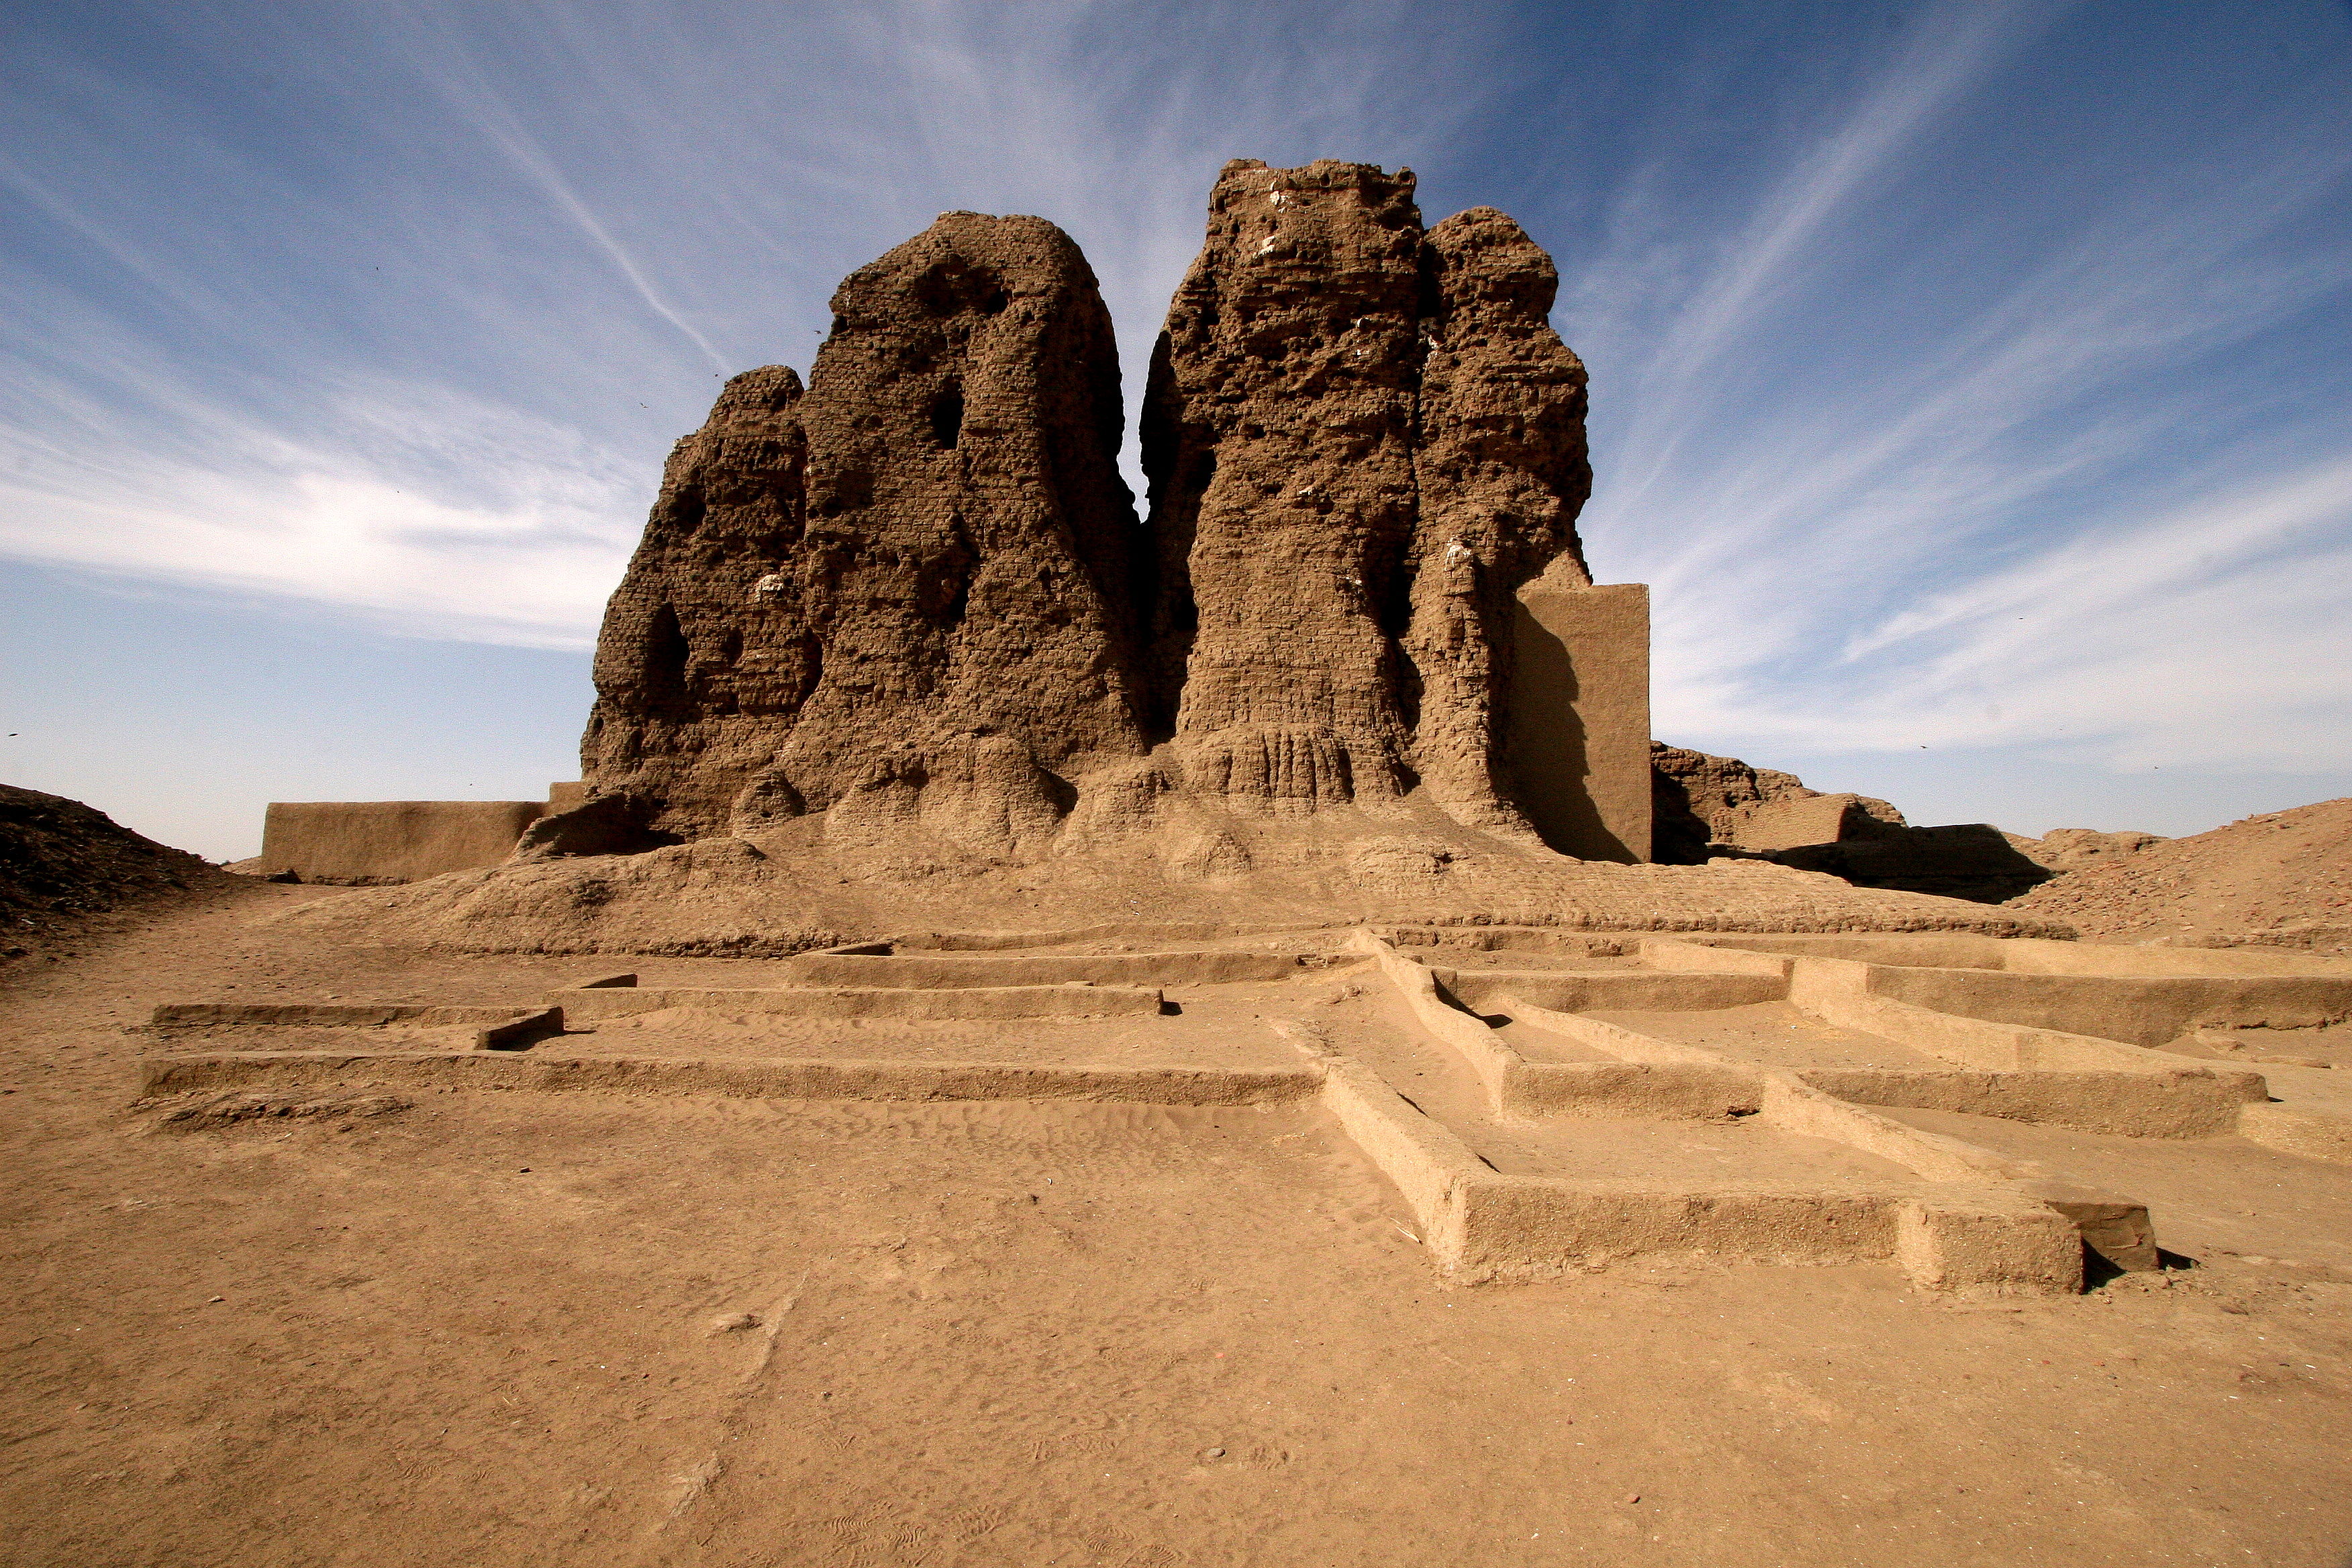 6 - Nabu's patron city of Borsippa & his ziggurat temple-residence